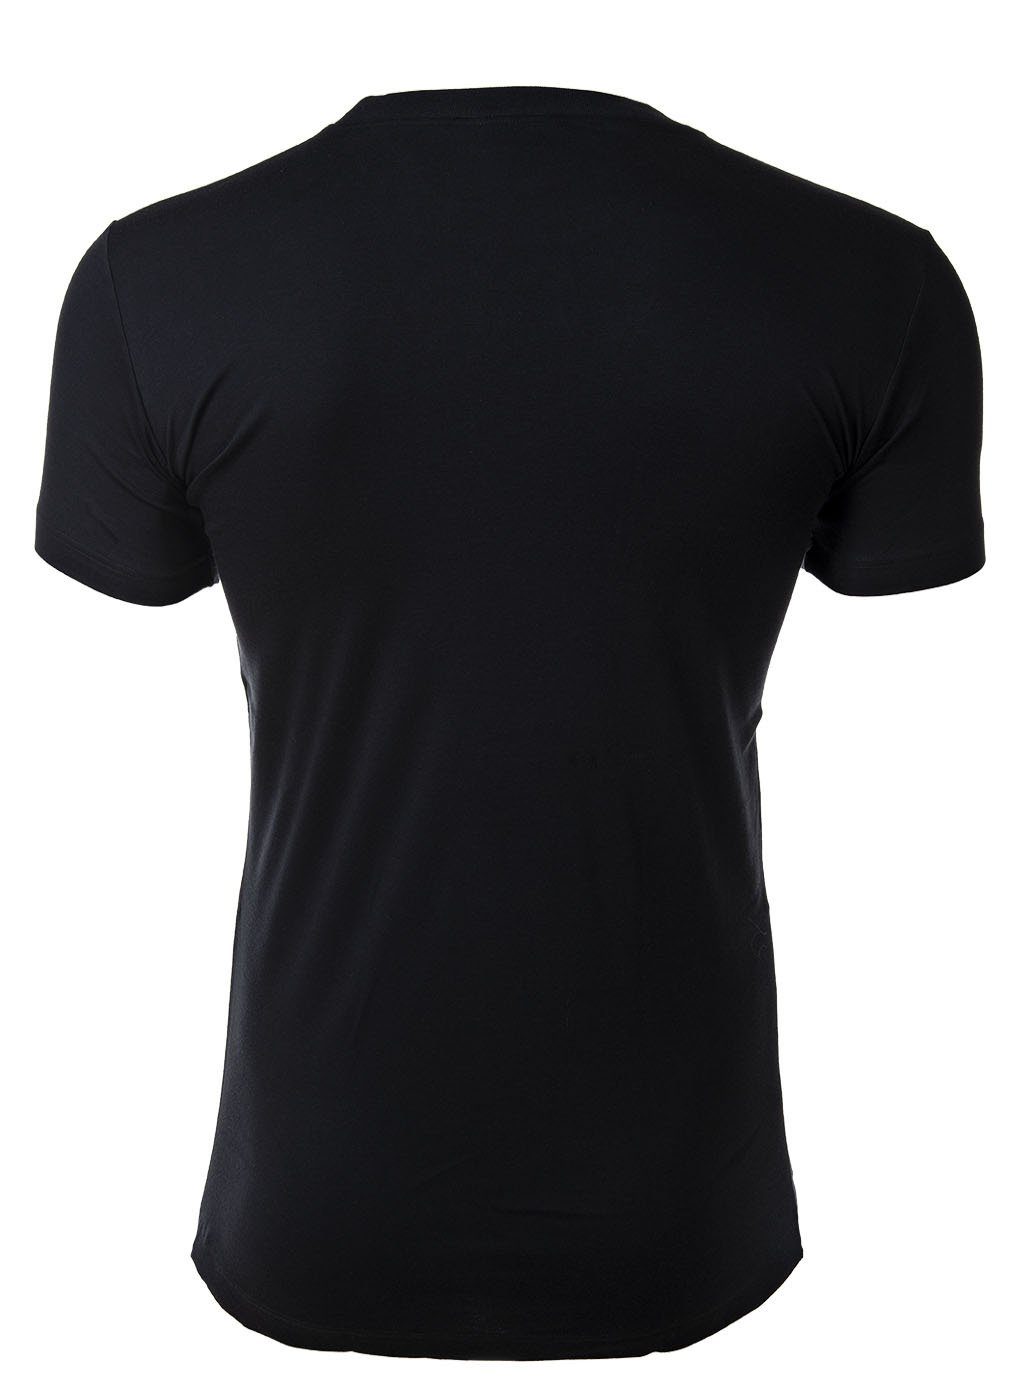 Novila T-Shirt Herren American-Shirt Natural Schwarz Comfort - Rundhals